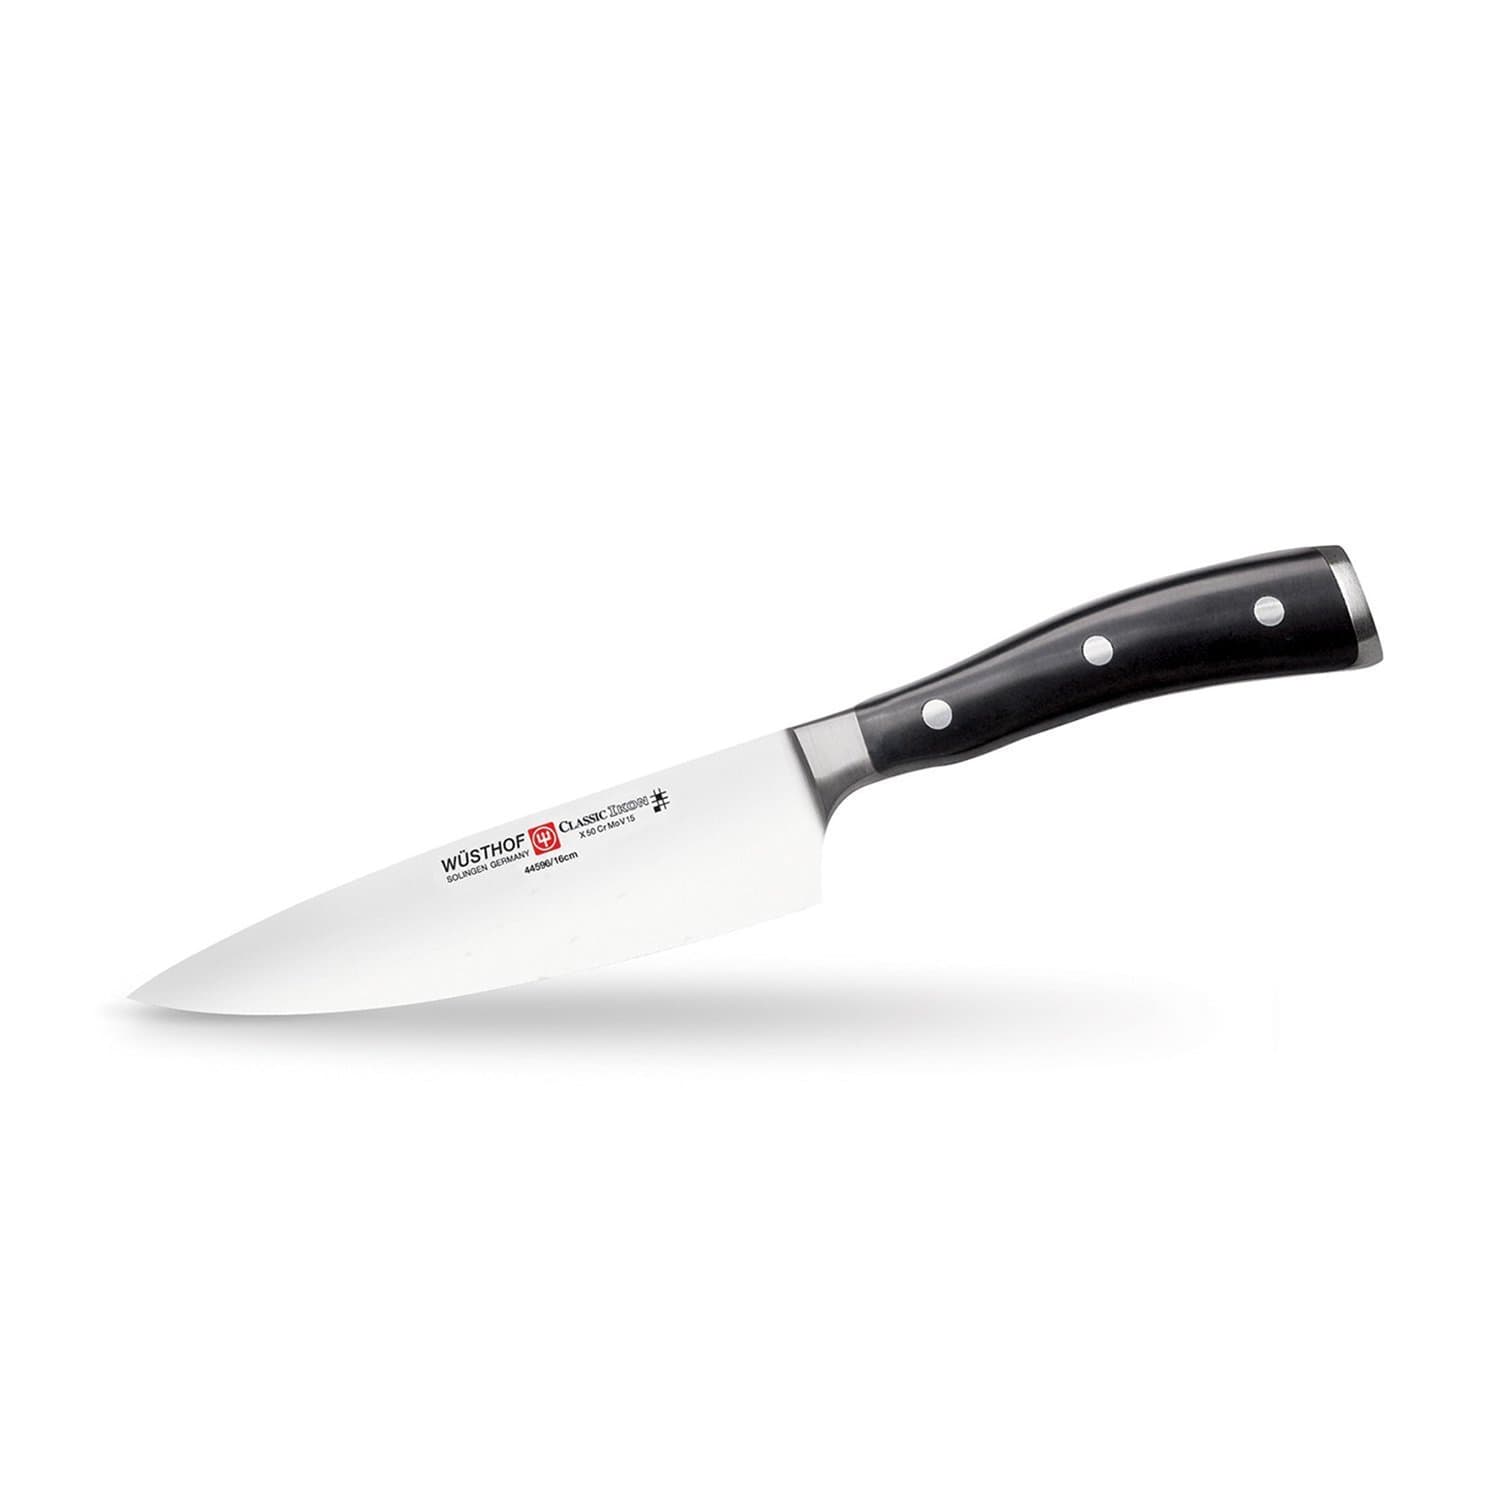 Wusthof Classic Ikon Cooks Knife - Black and Silver, 6 inch - 984893 - Jashanmal Home